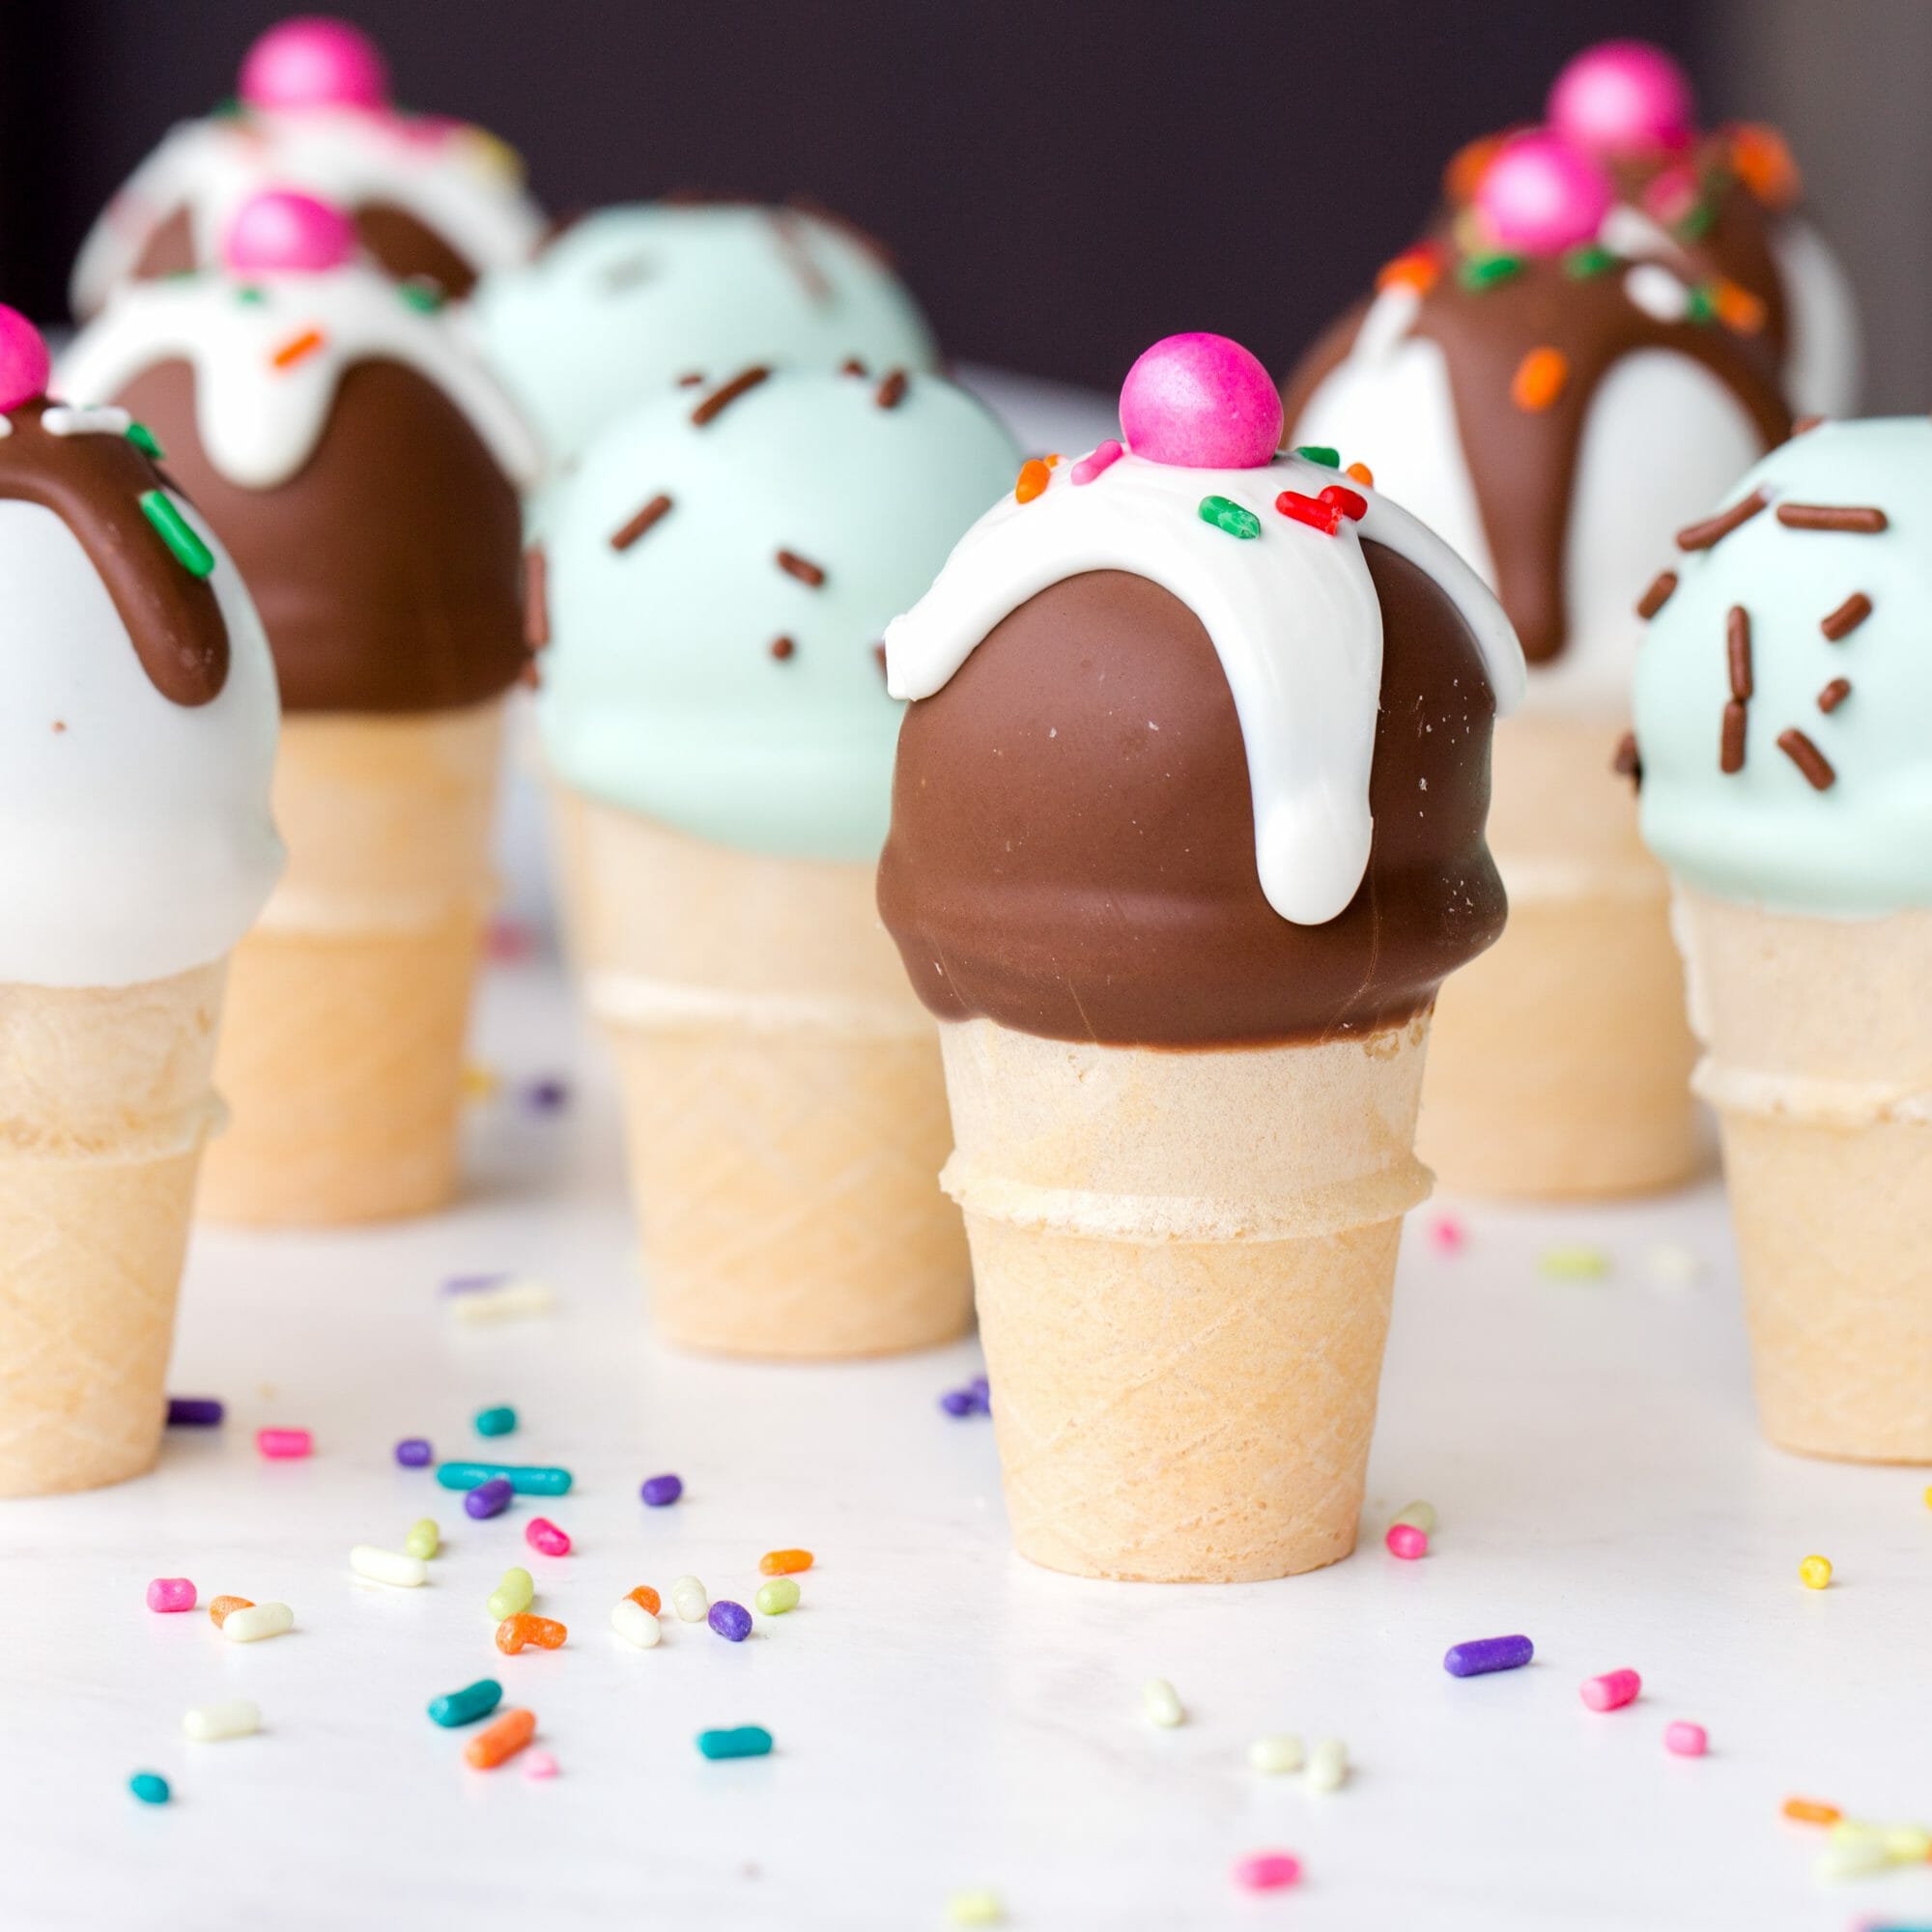 Ice Cream Social | ice cream inspired desserts | ice cream cakes | ice cream cookies || JennyCookies.com #recipe #icecream #cookies #cakes #summerdesserts #icecreamdesserts #summer #jennycookies